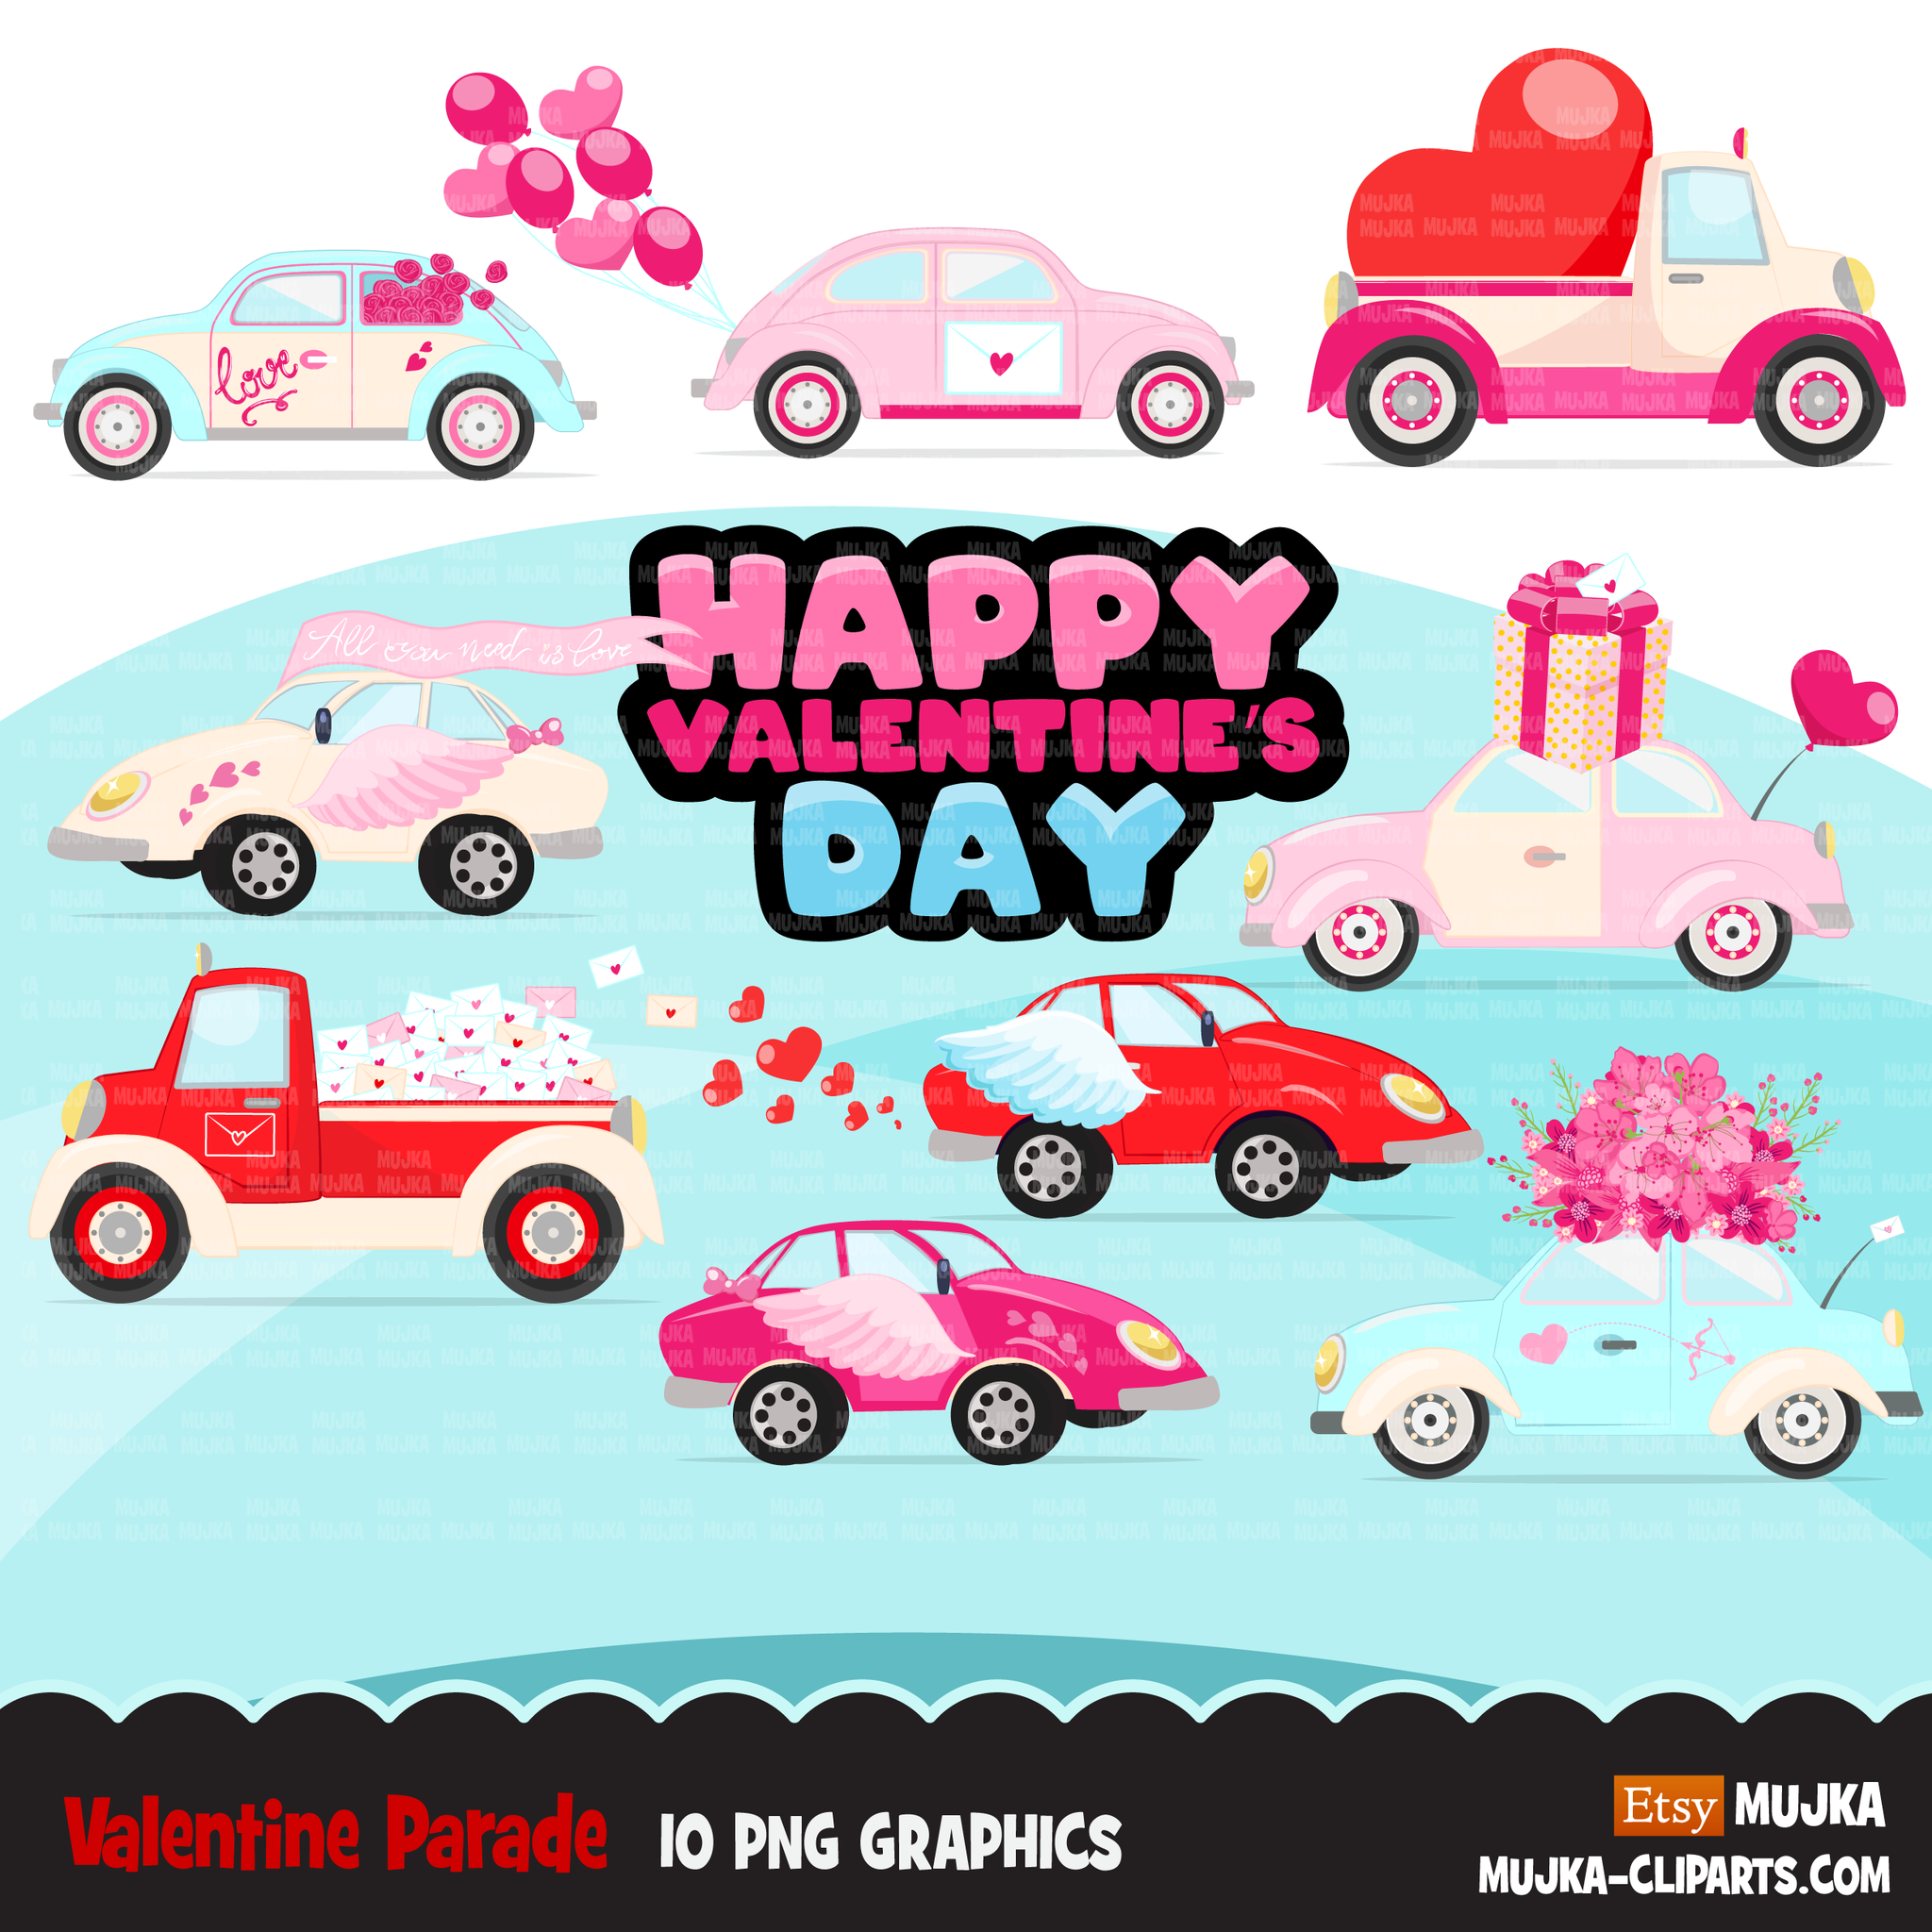 Valentine clipart Design Bundle V2, Cute celebration graphics, boys and girls, animals